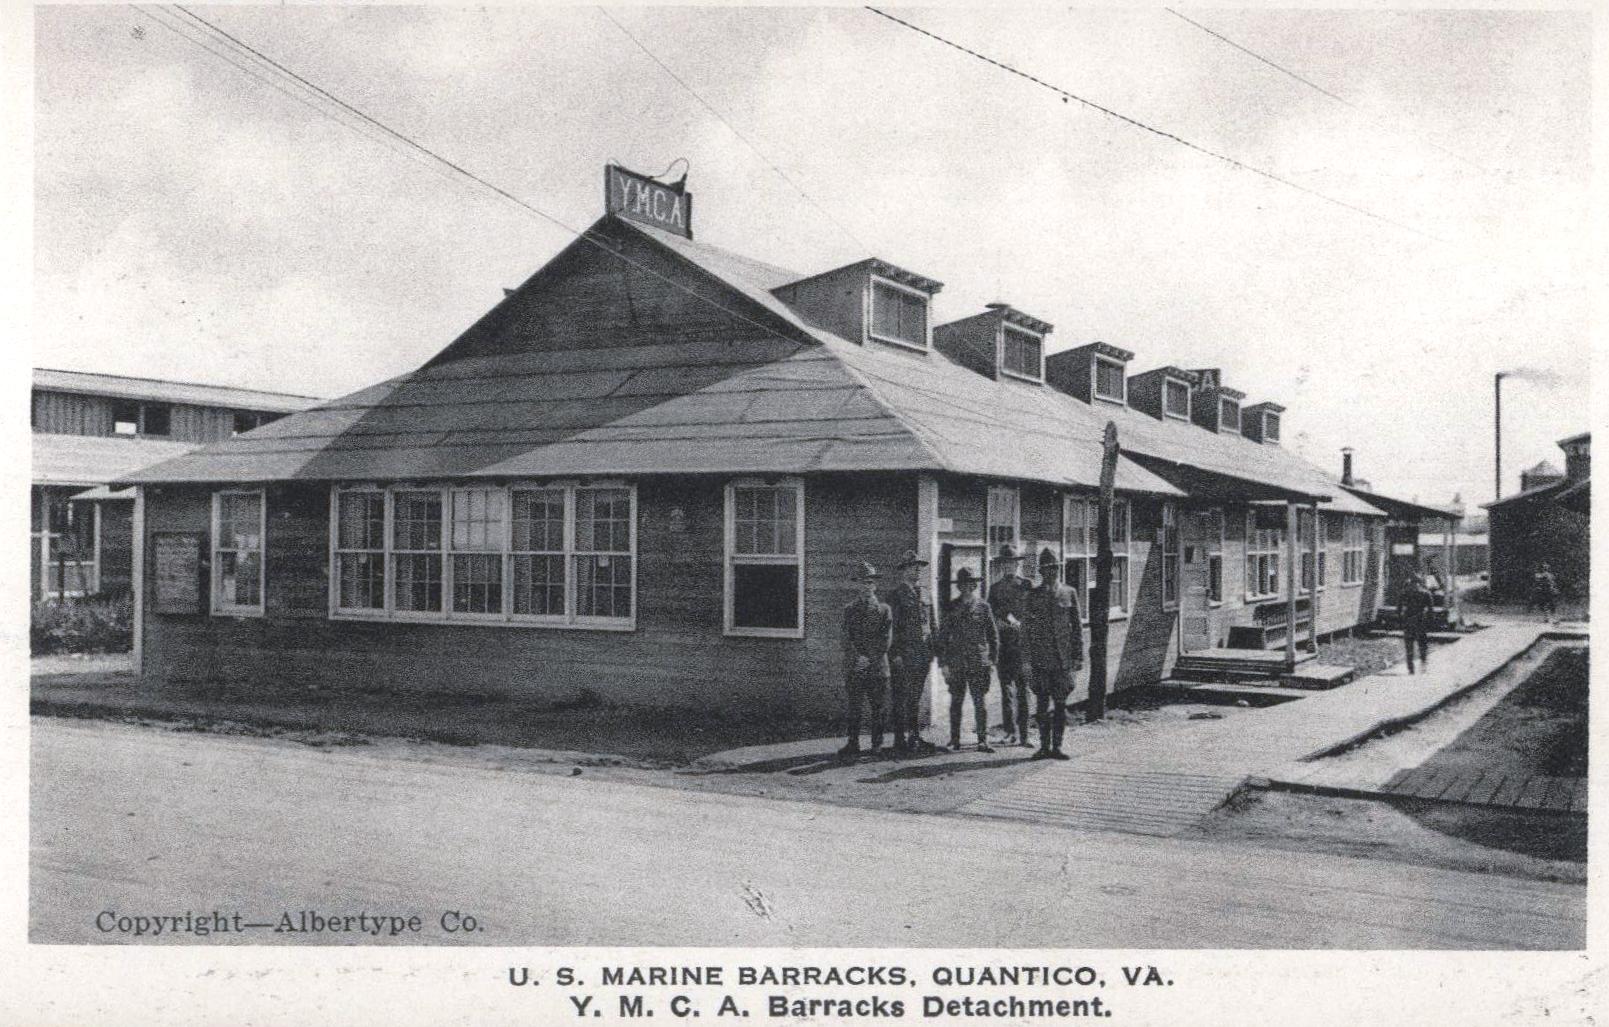 Post card featuring YMCA barracks building of US Marine Barracks, Quantico, Virginia, United States, circa 1918